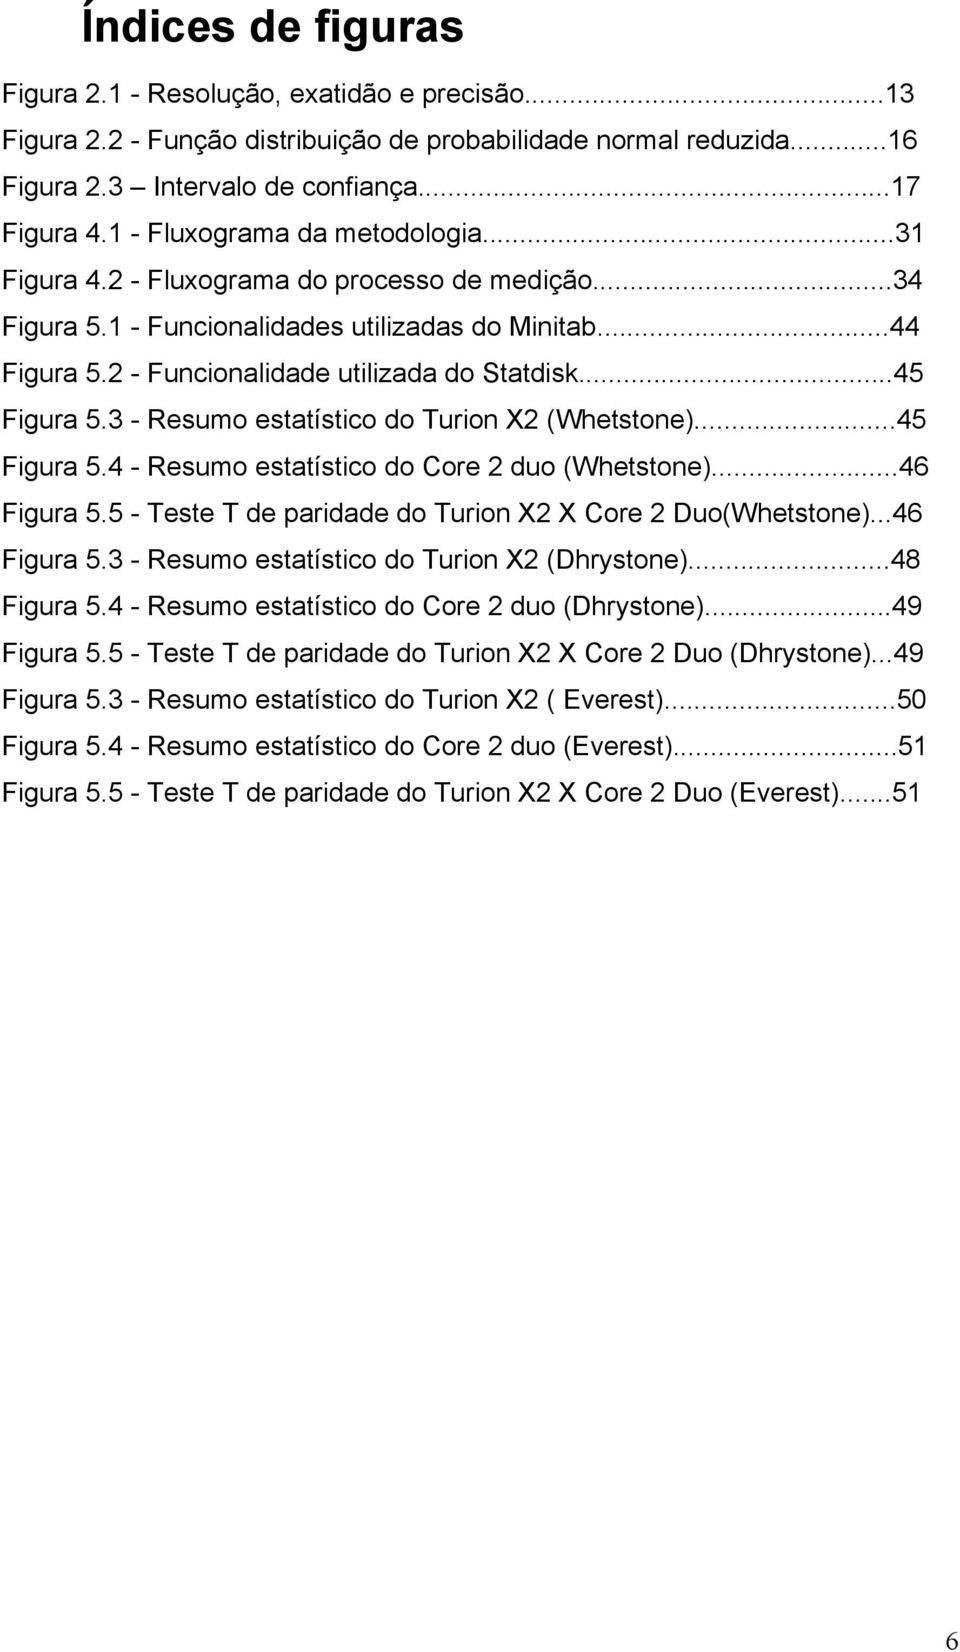 ..45 Figura 5.3 - Resumo estatístico do Turion X2 (Whetstone)...45 Figura 5.4 - Resumo estatístico do Core 2 duo (Whetstone)...46 Figura 5.5 - Teste T de paridade do Turion X2 X Core 2 Duo(Whetstone).